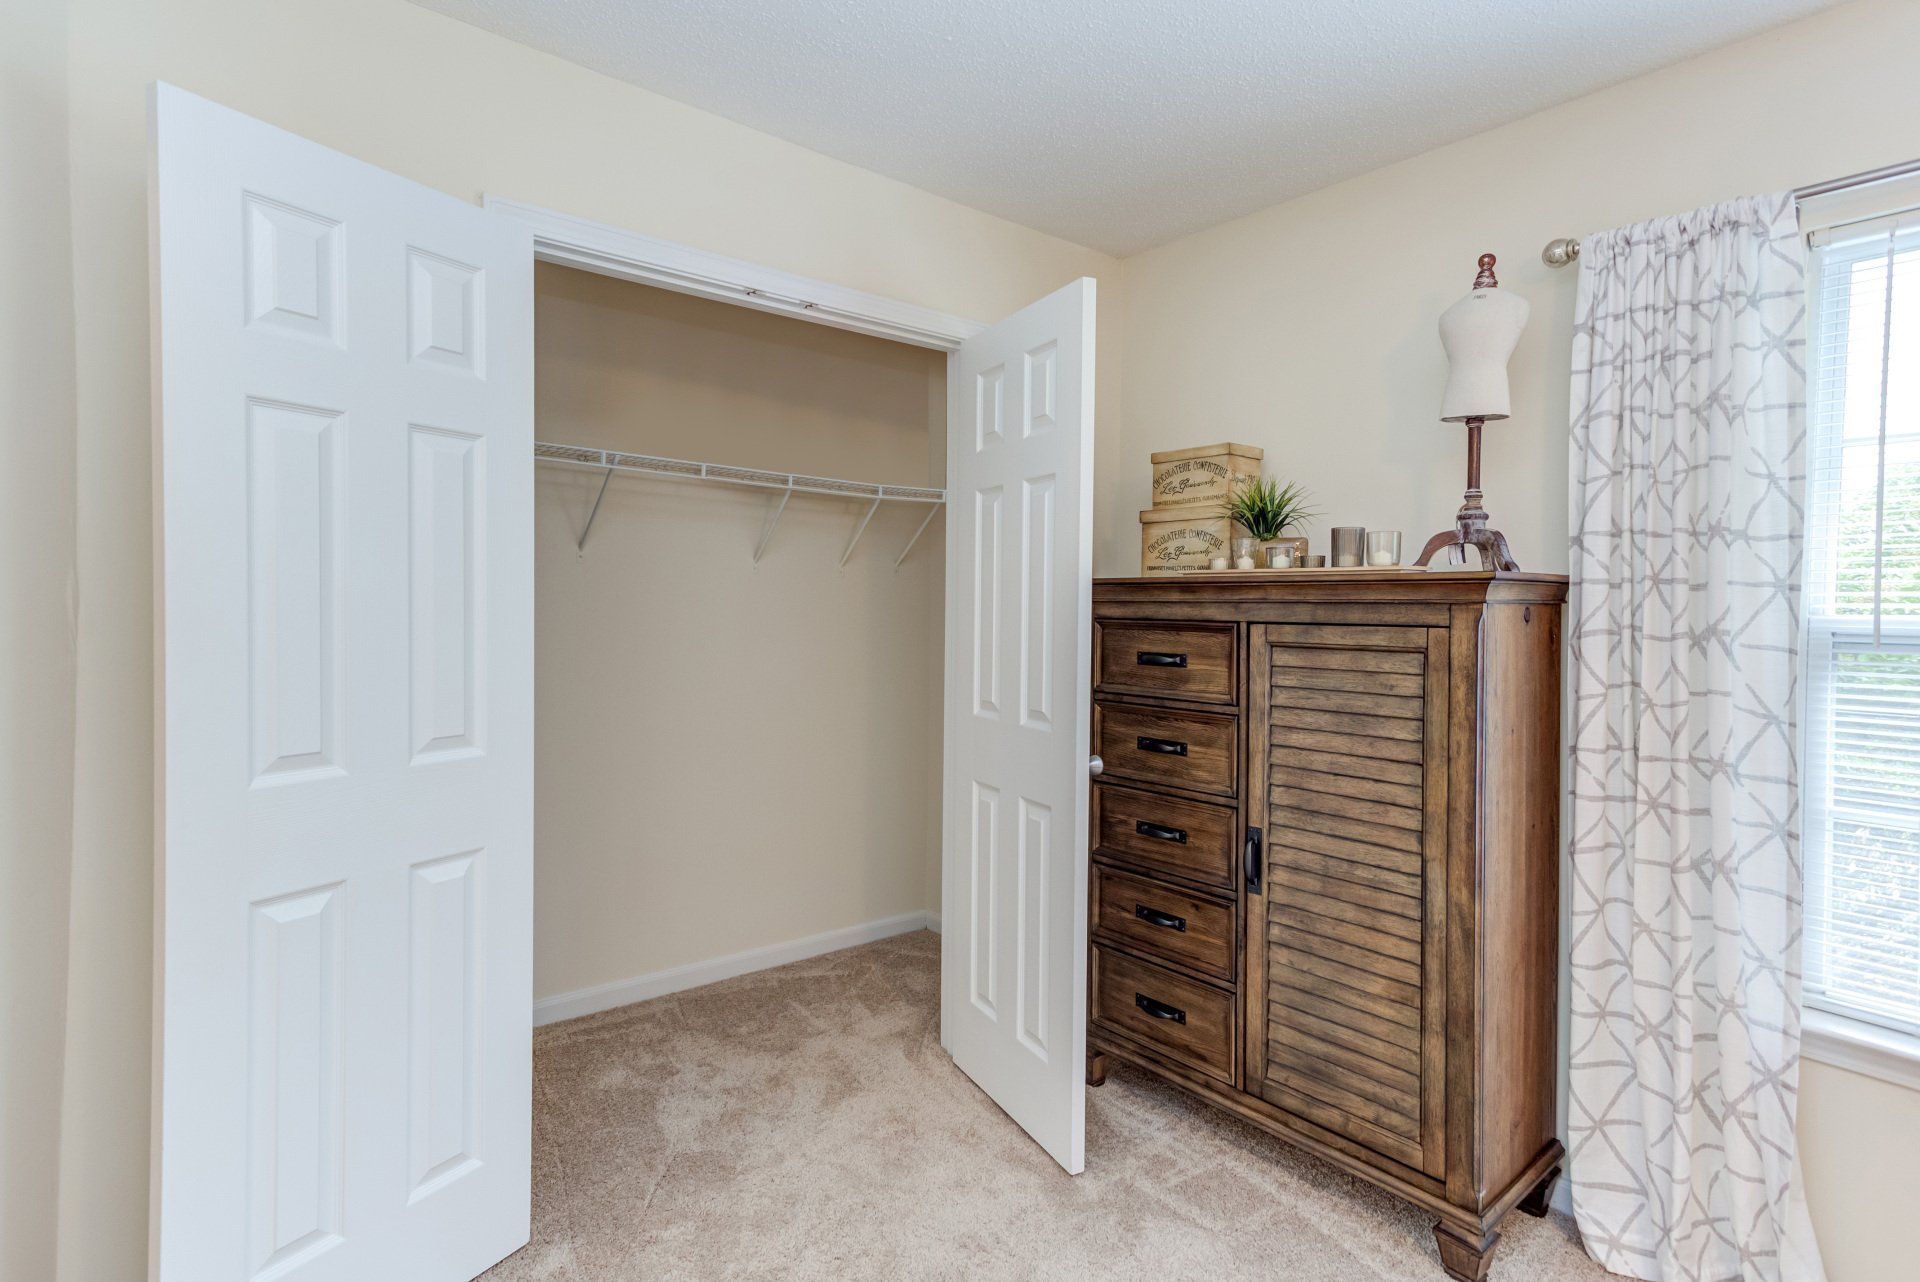 A bedroom with a walk-in closet and a dresser at Morgan Ridge.